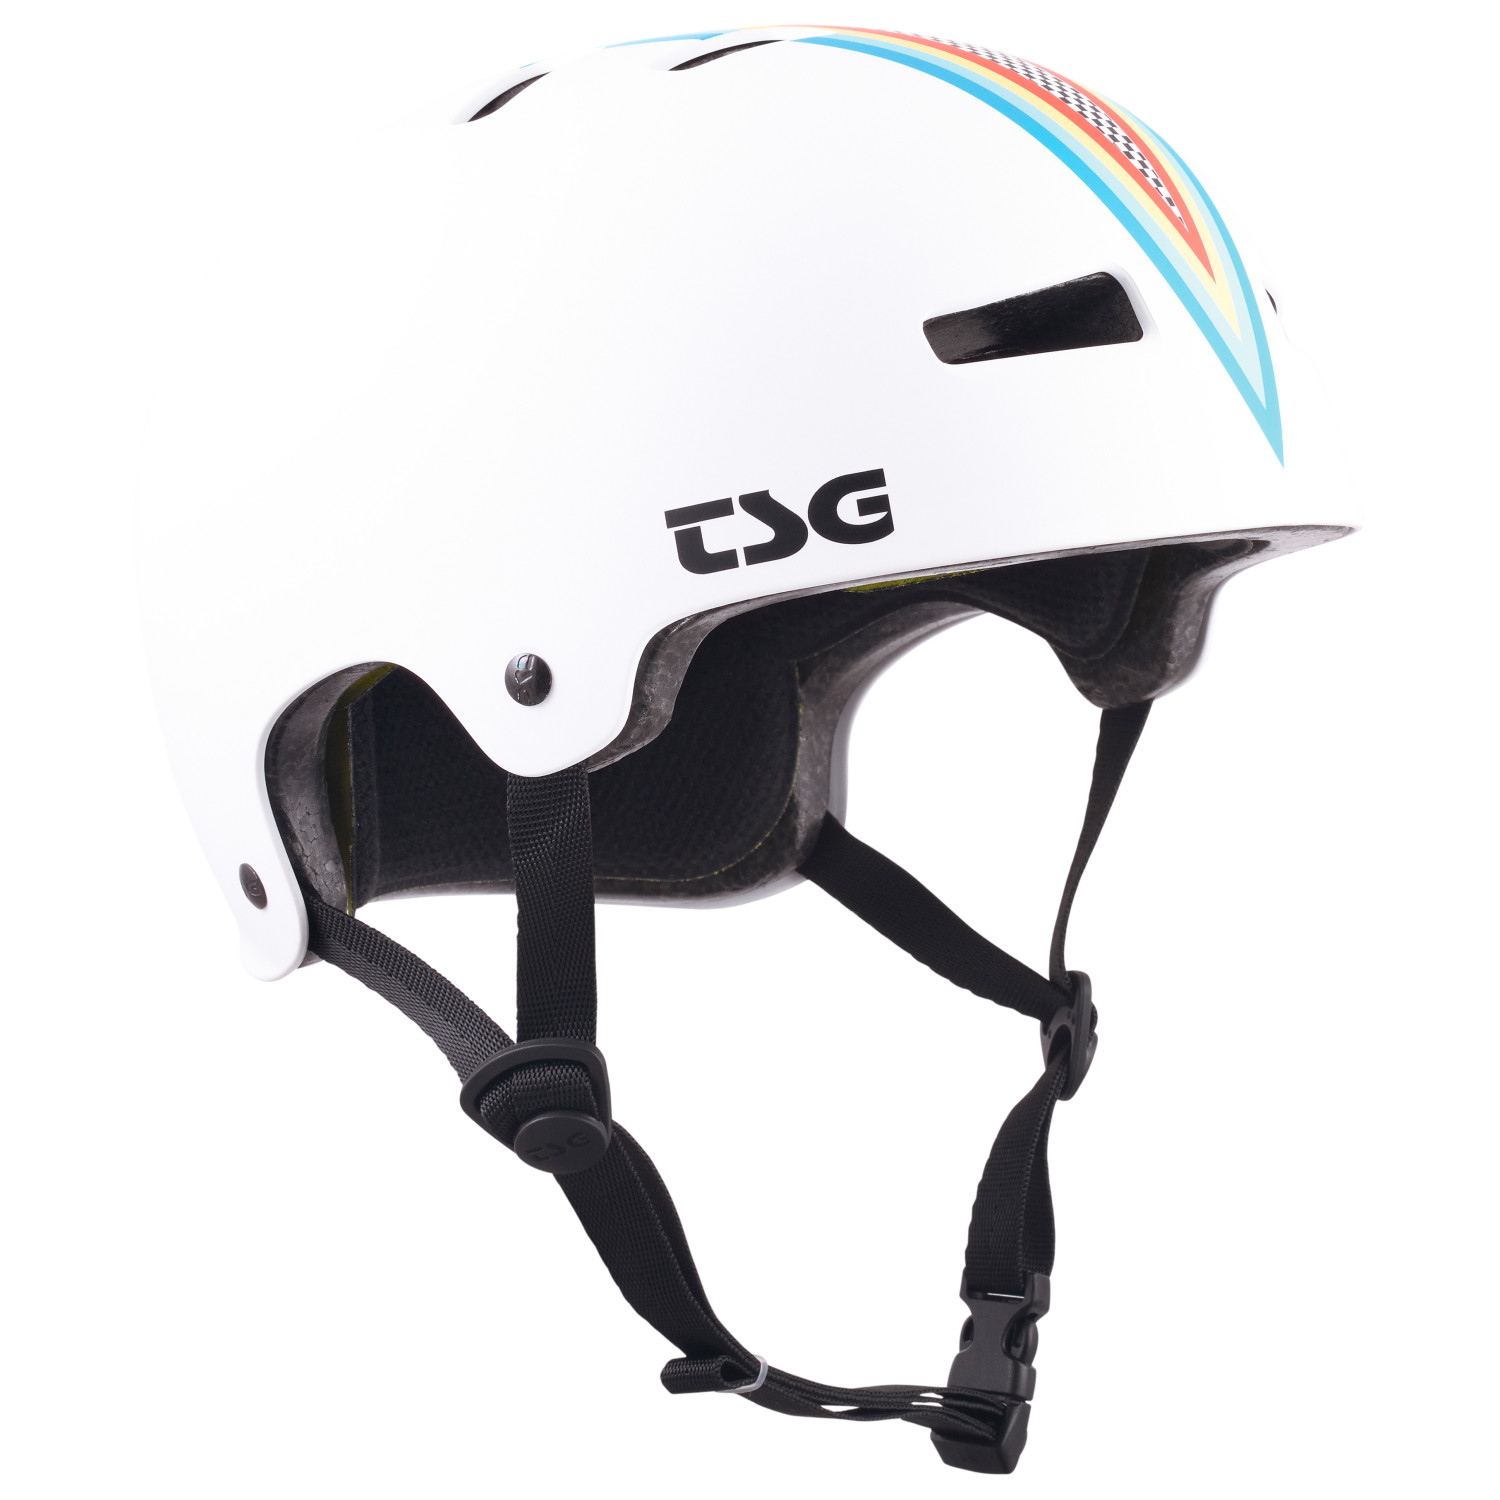 Велосипедный шлем Tsg Evolution Graphic Design, цвет Pintail шлем велосипедный trix